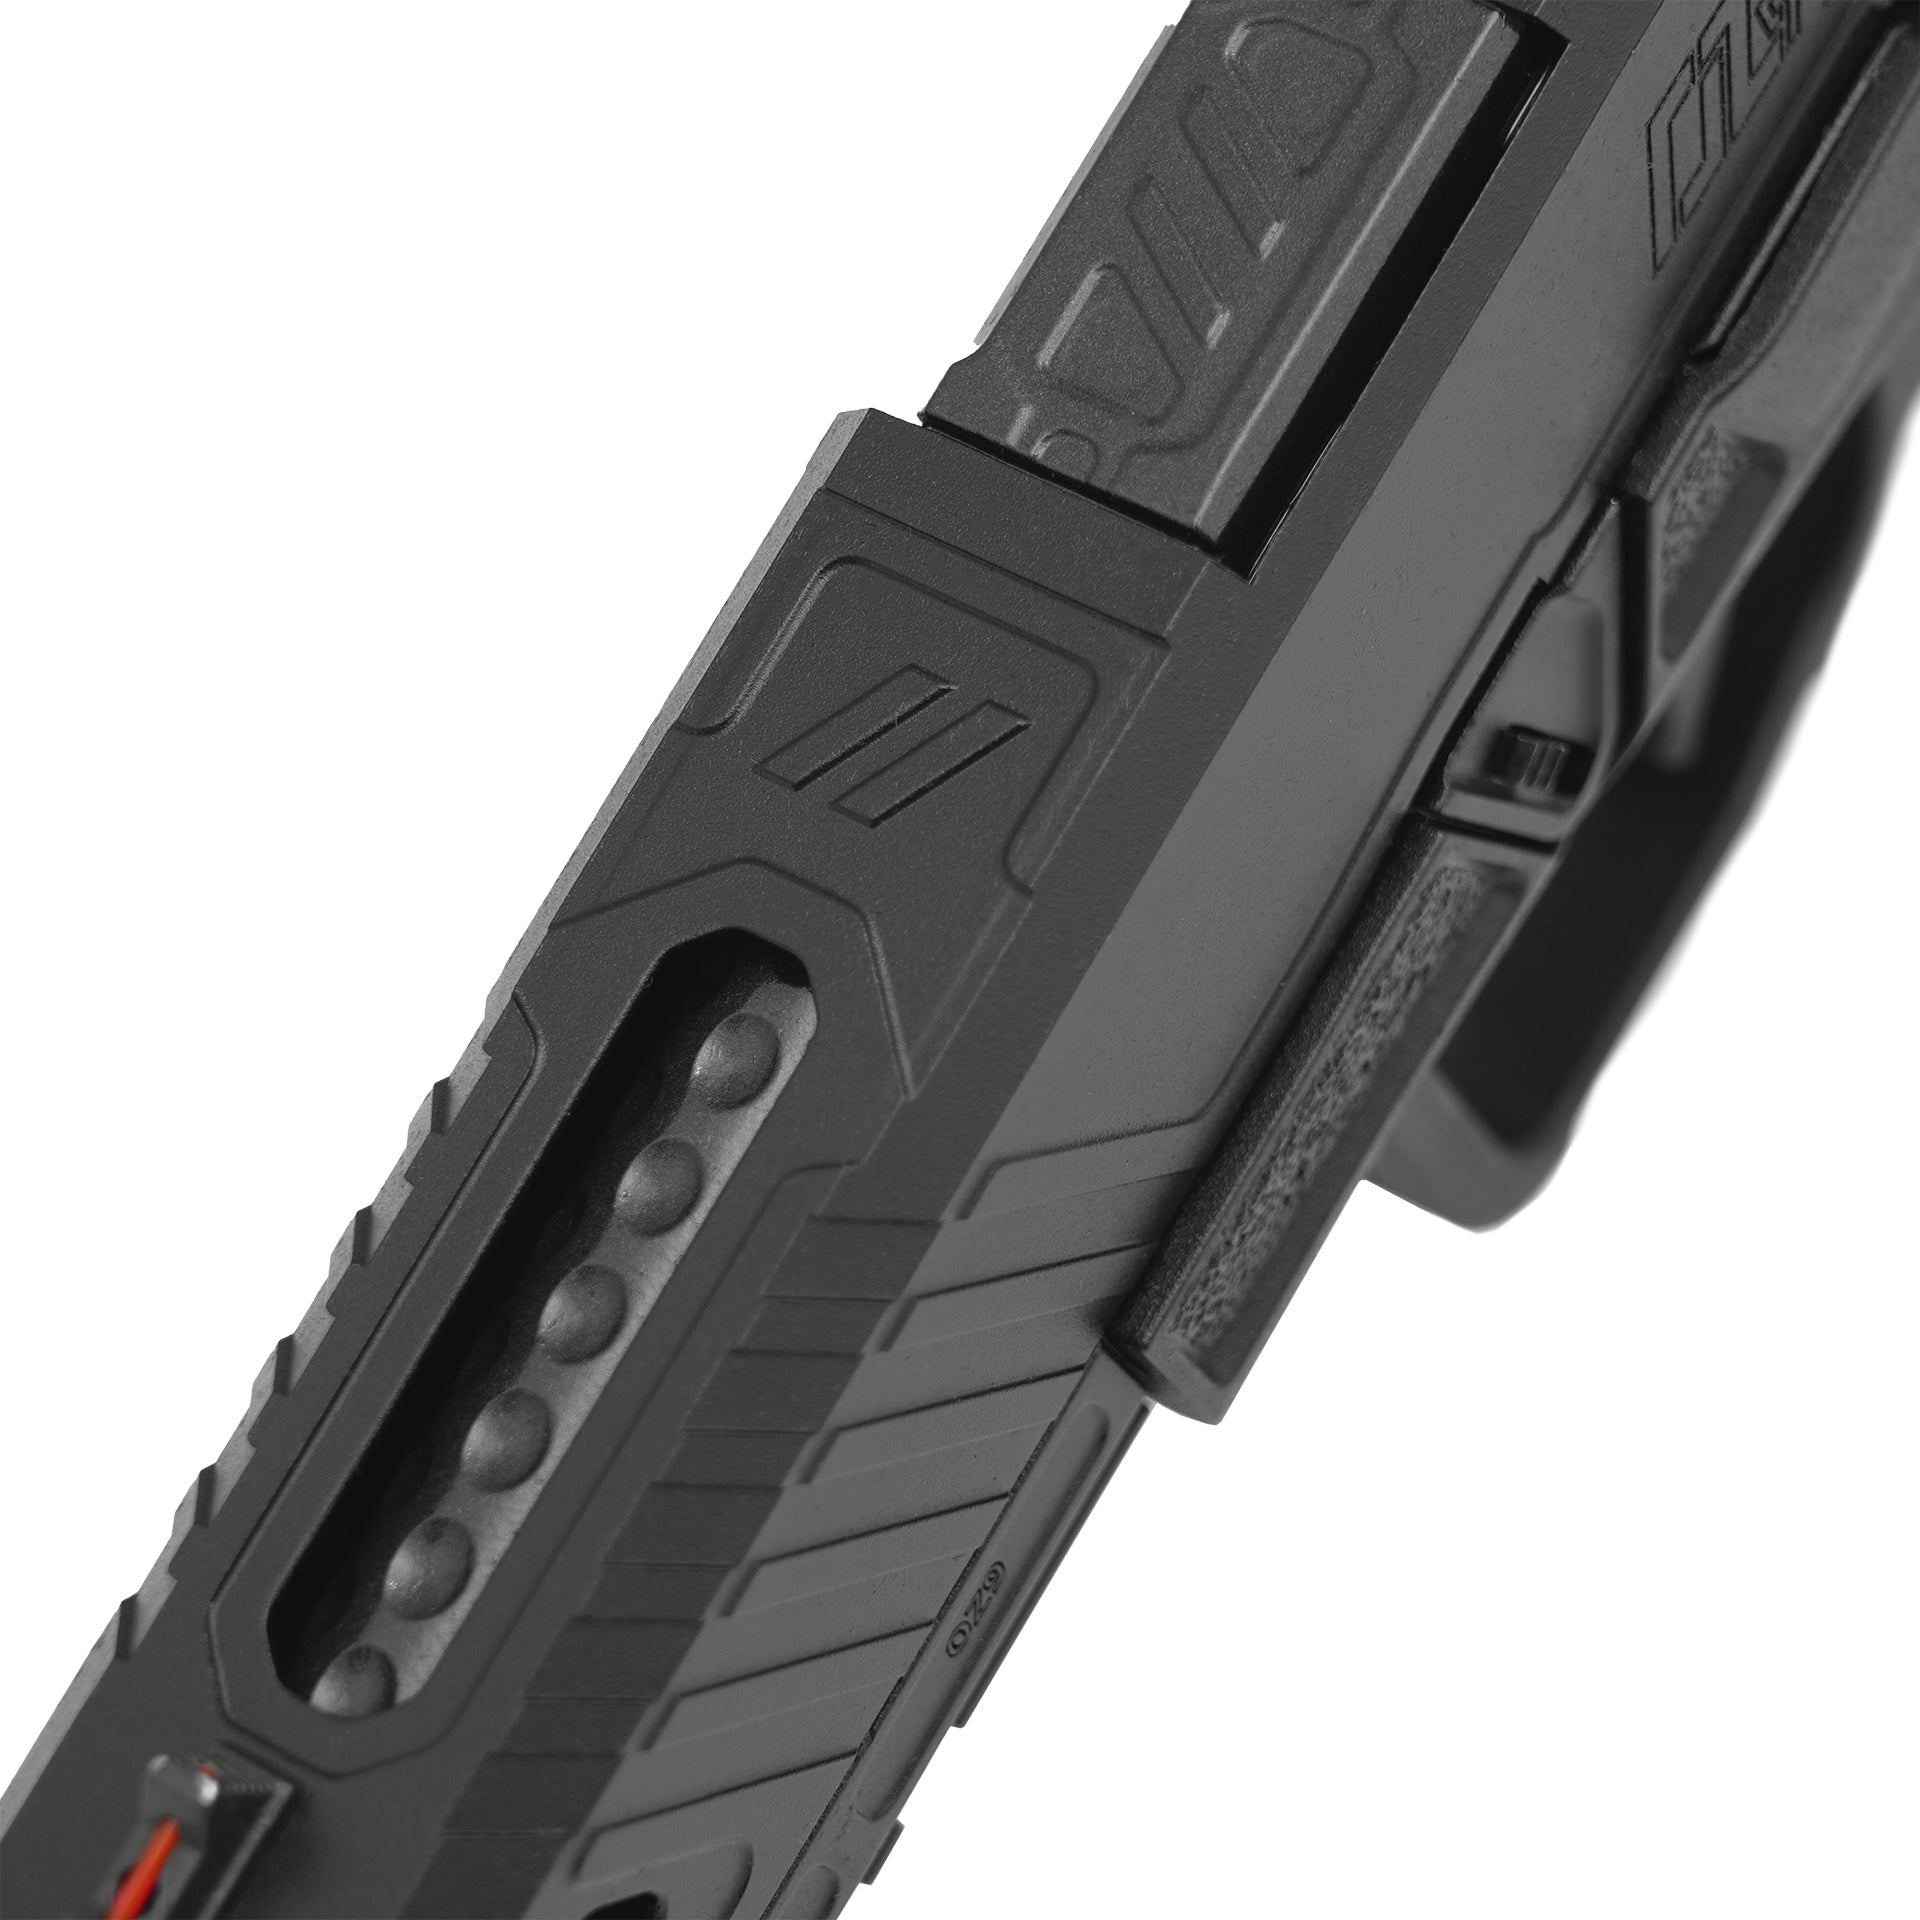 PTS ZEV OZ9 Elite標準版GBB手槍